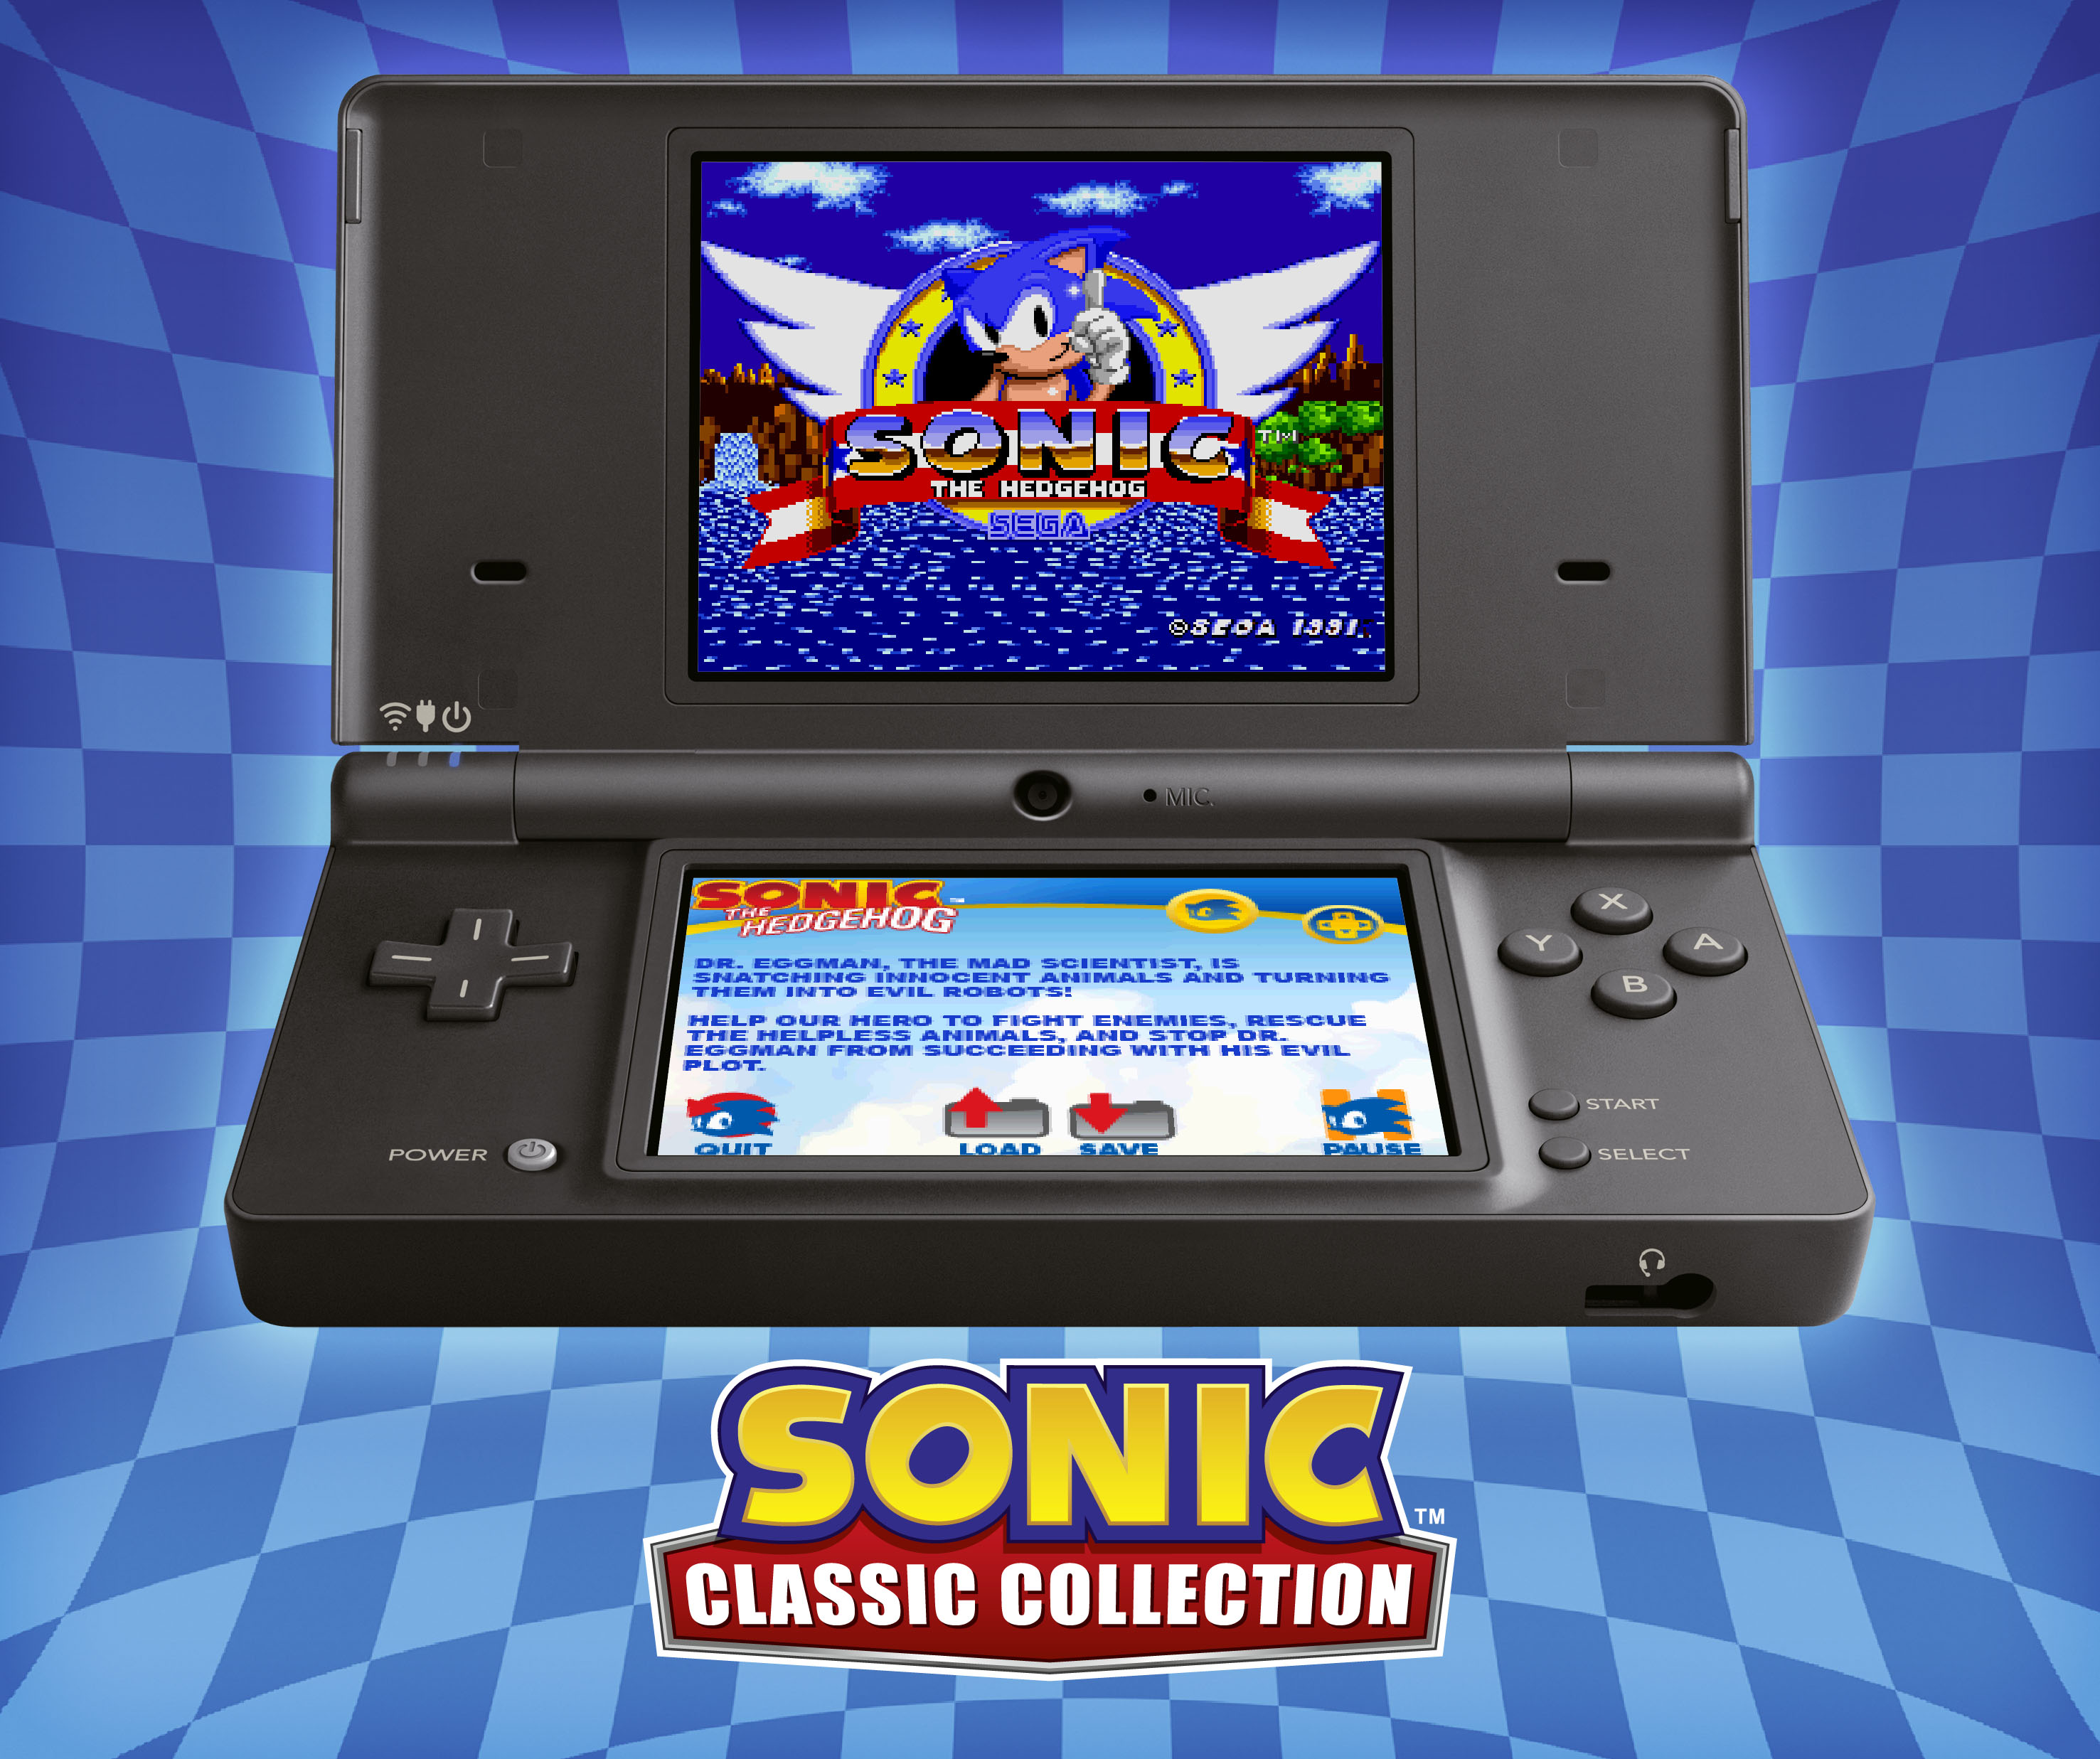 Sonic classic играть. Портативная приставка Nintendo Sonic. Нинтендо ДС Соник. Sonic Classic collection DS. Соник Классик коллекшн.